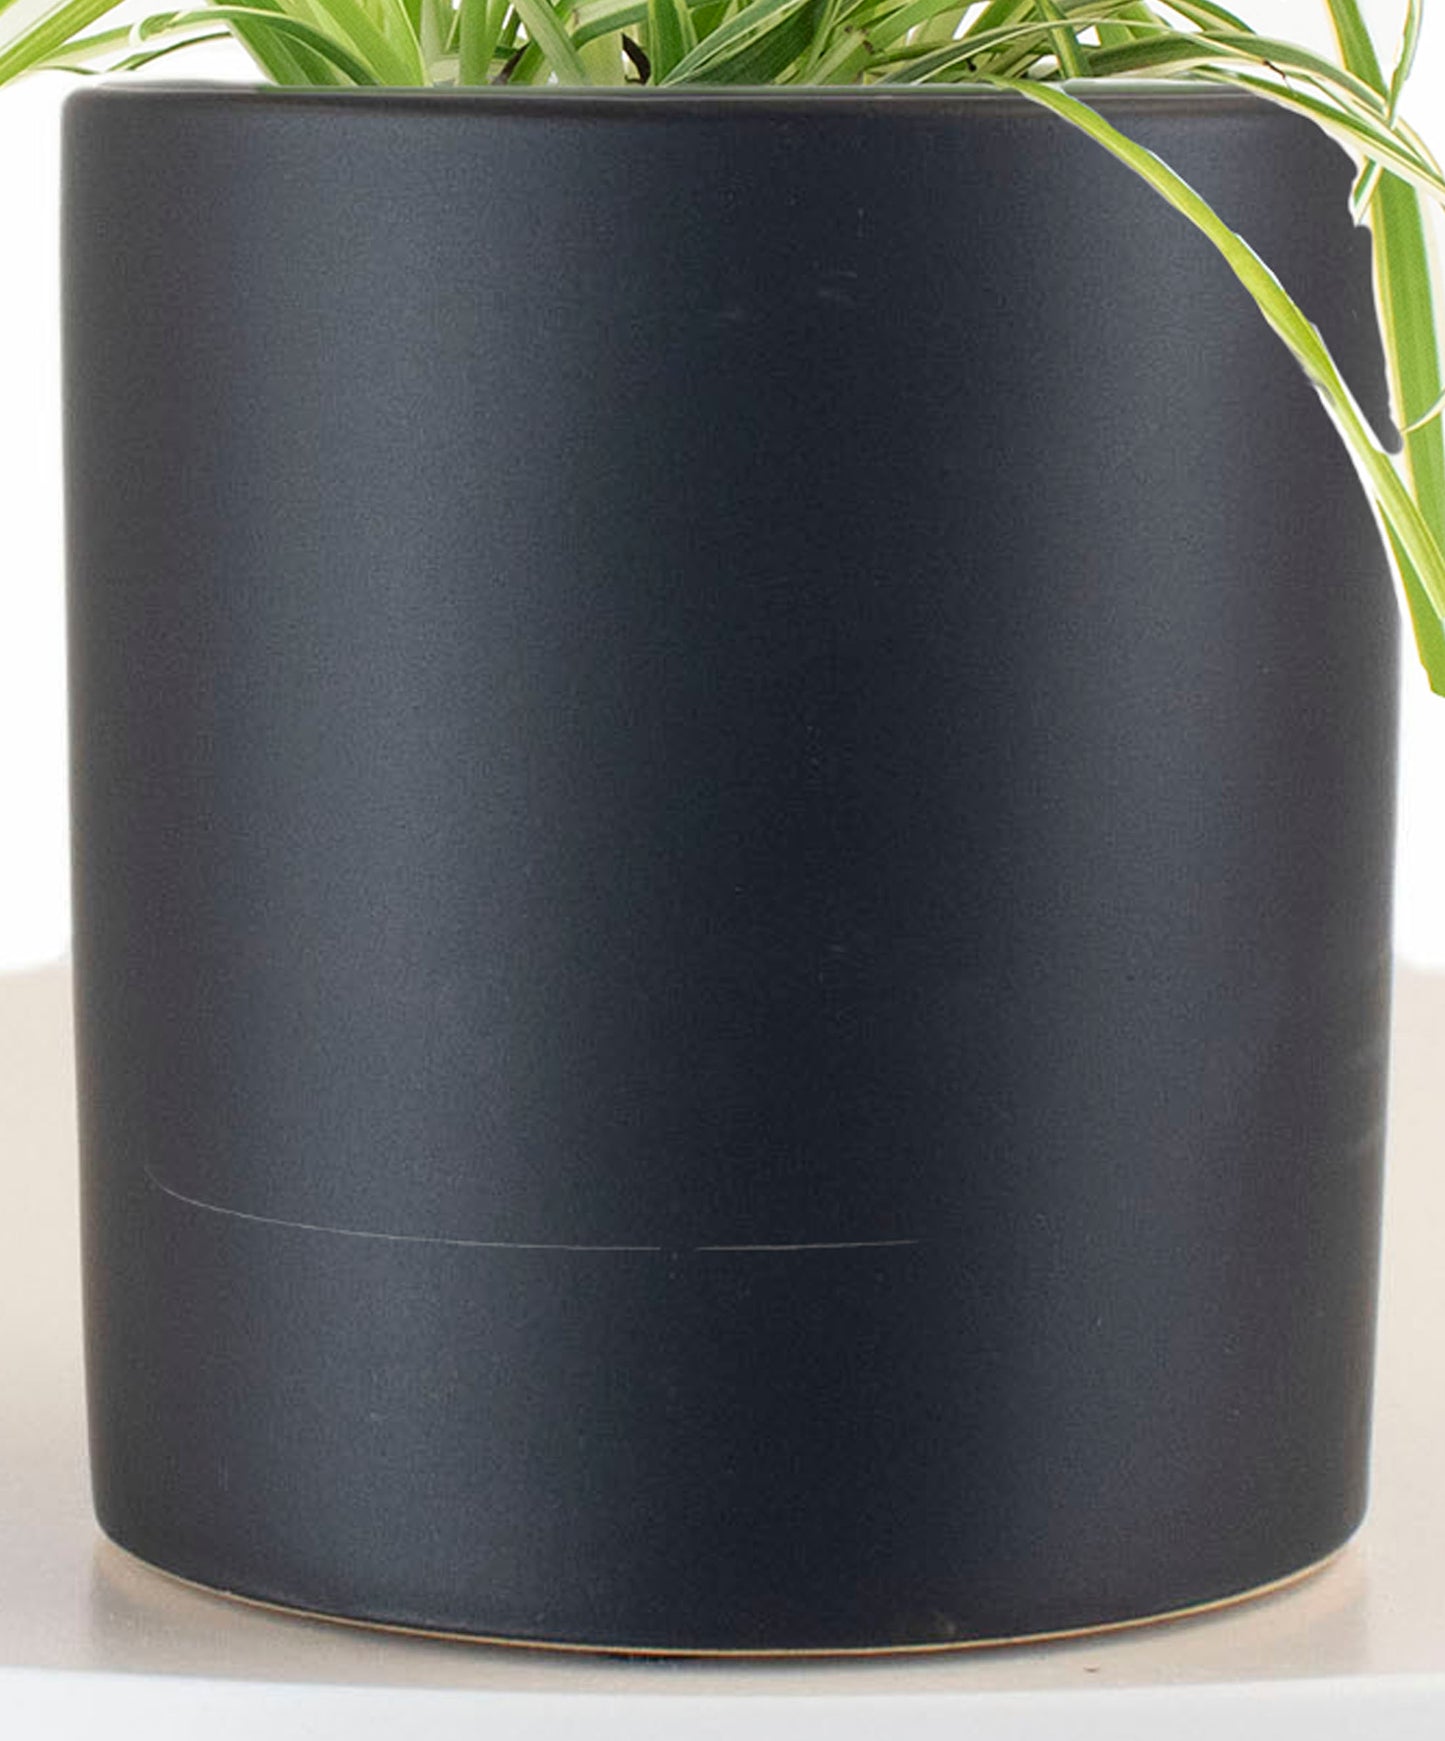 Spider Plant in Black Ceramic Cylinder Planter